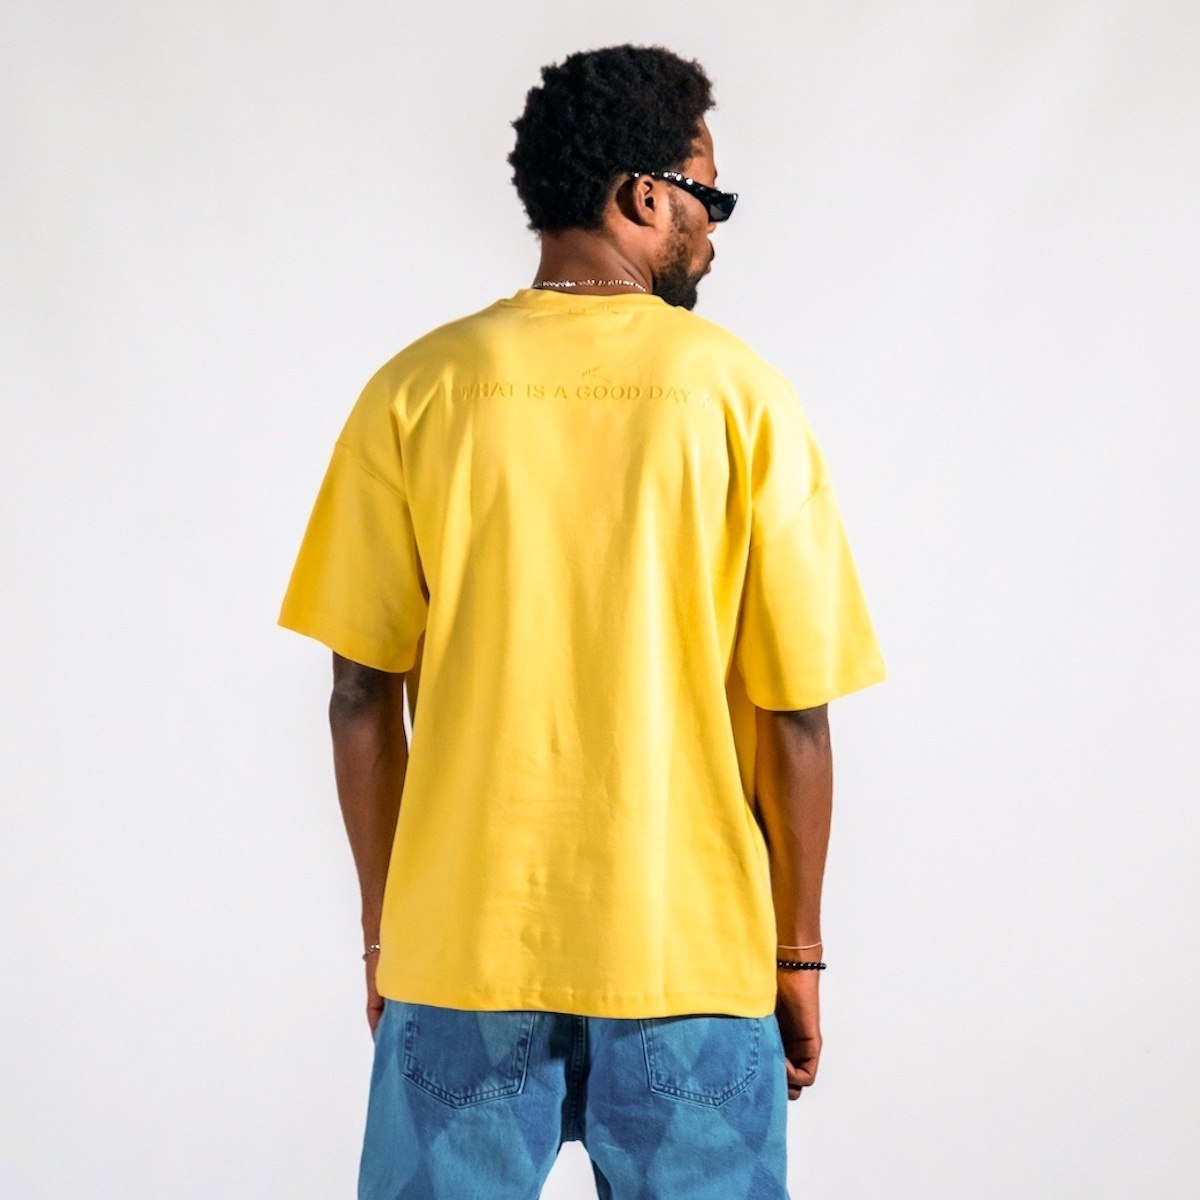 "Libertad" Camiseta Oversize para Hombres en Tela Gruesa Amarilla Estampada | Martin Valen